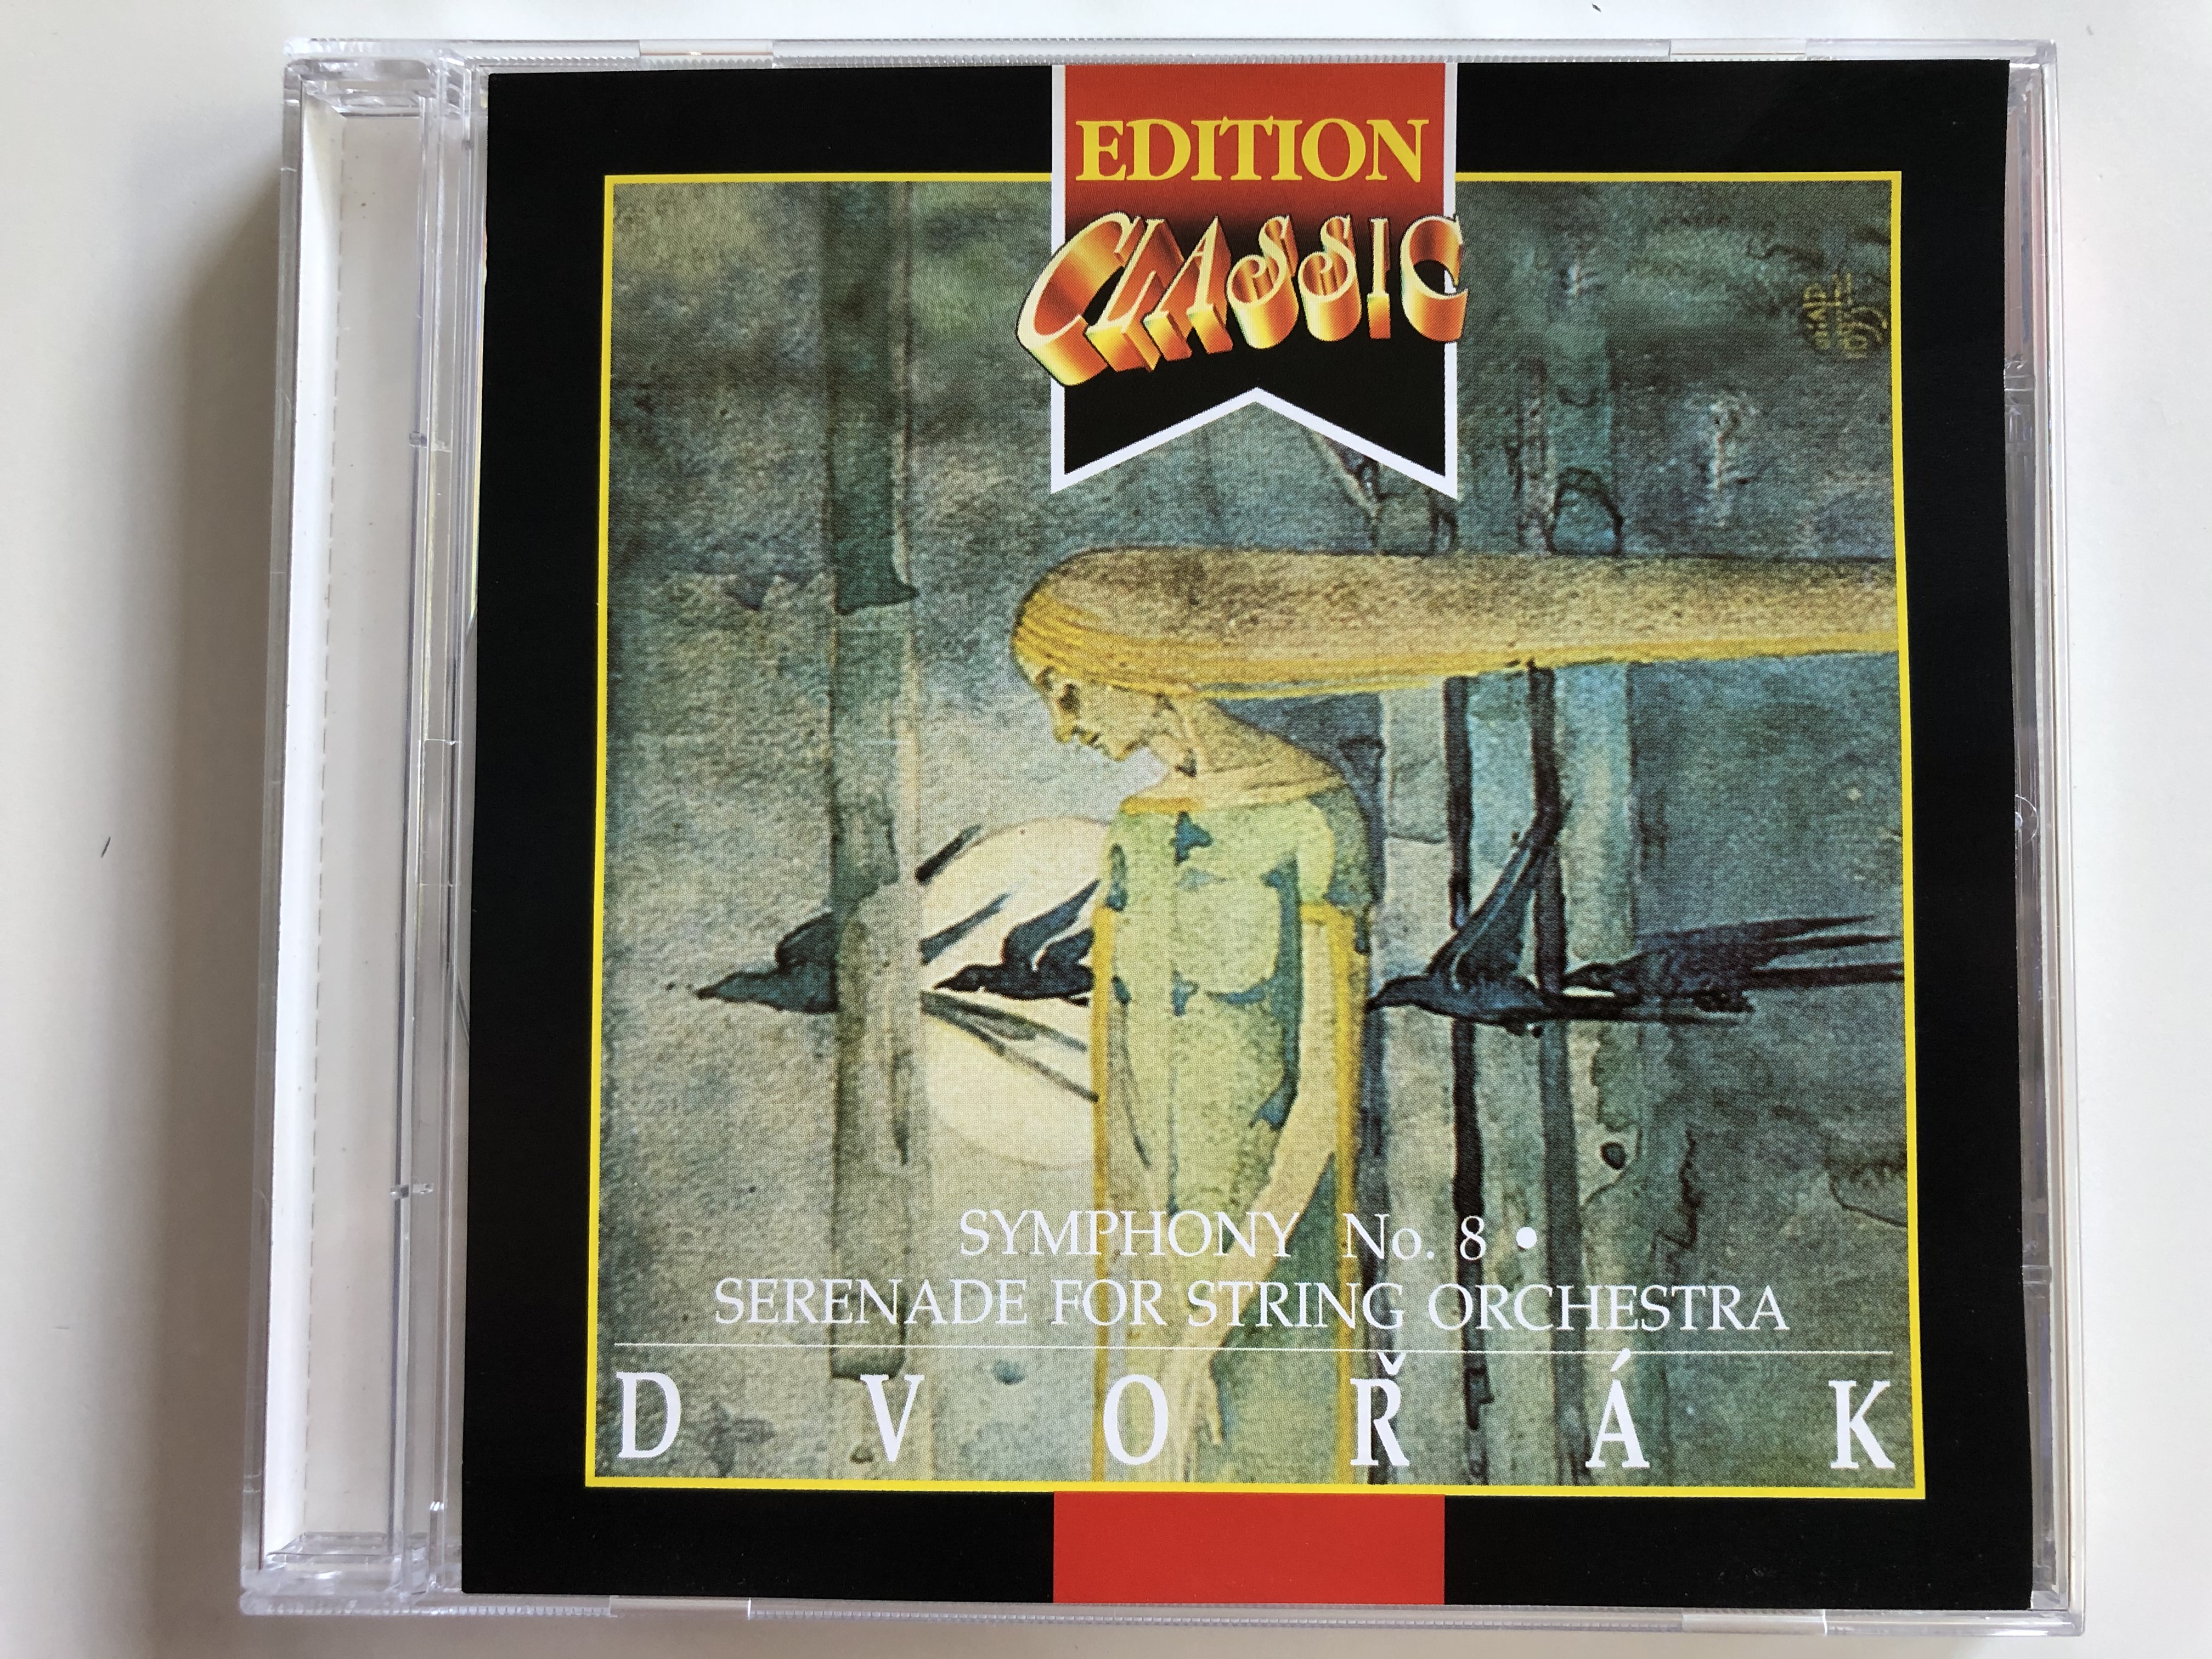 symphony-no.-8-serenade-for-string-orchestra-dvorak-edition-classic-audio-cd-1995-ec-1225-1-.jpg